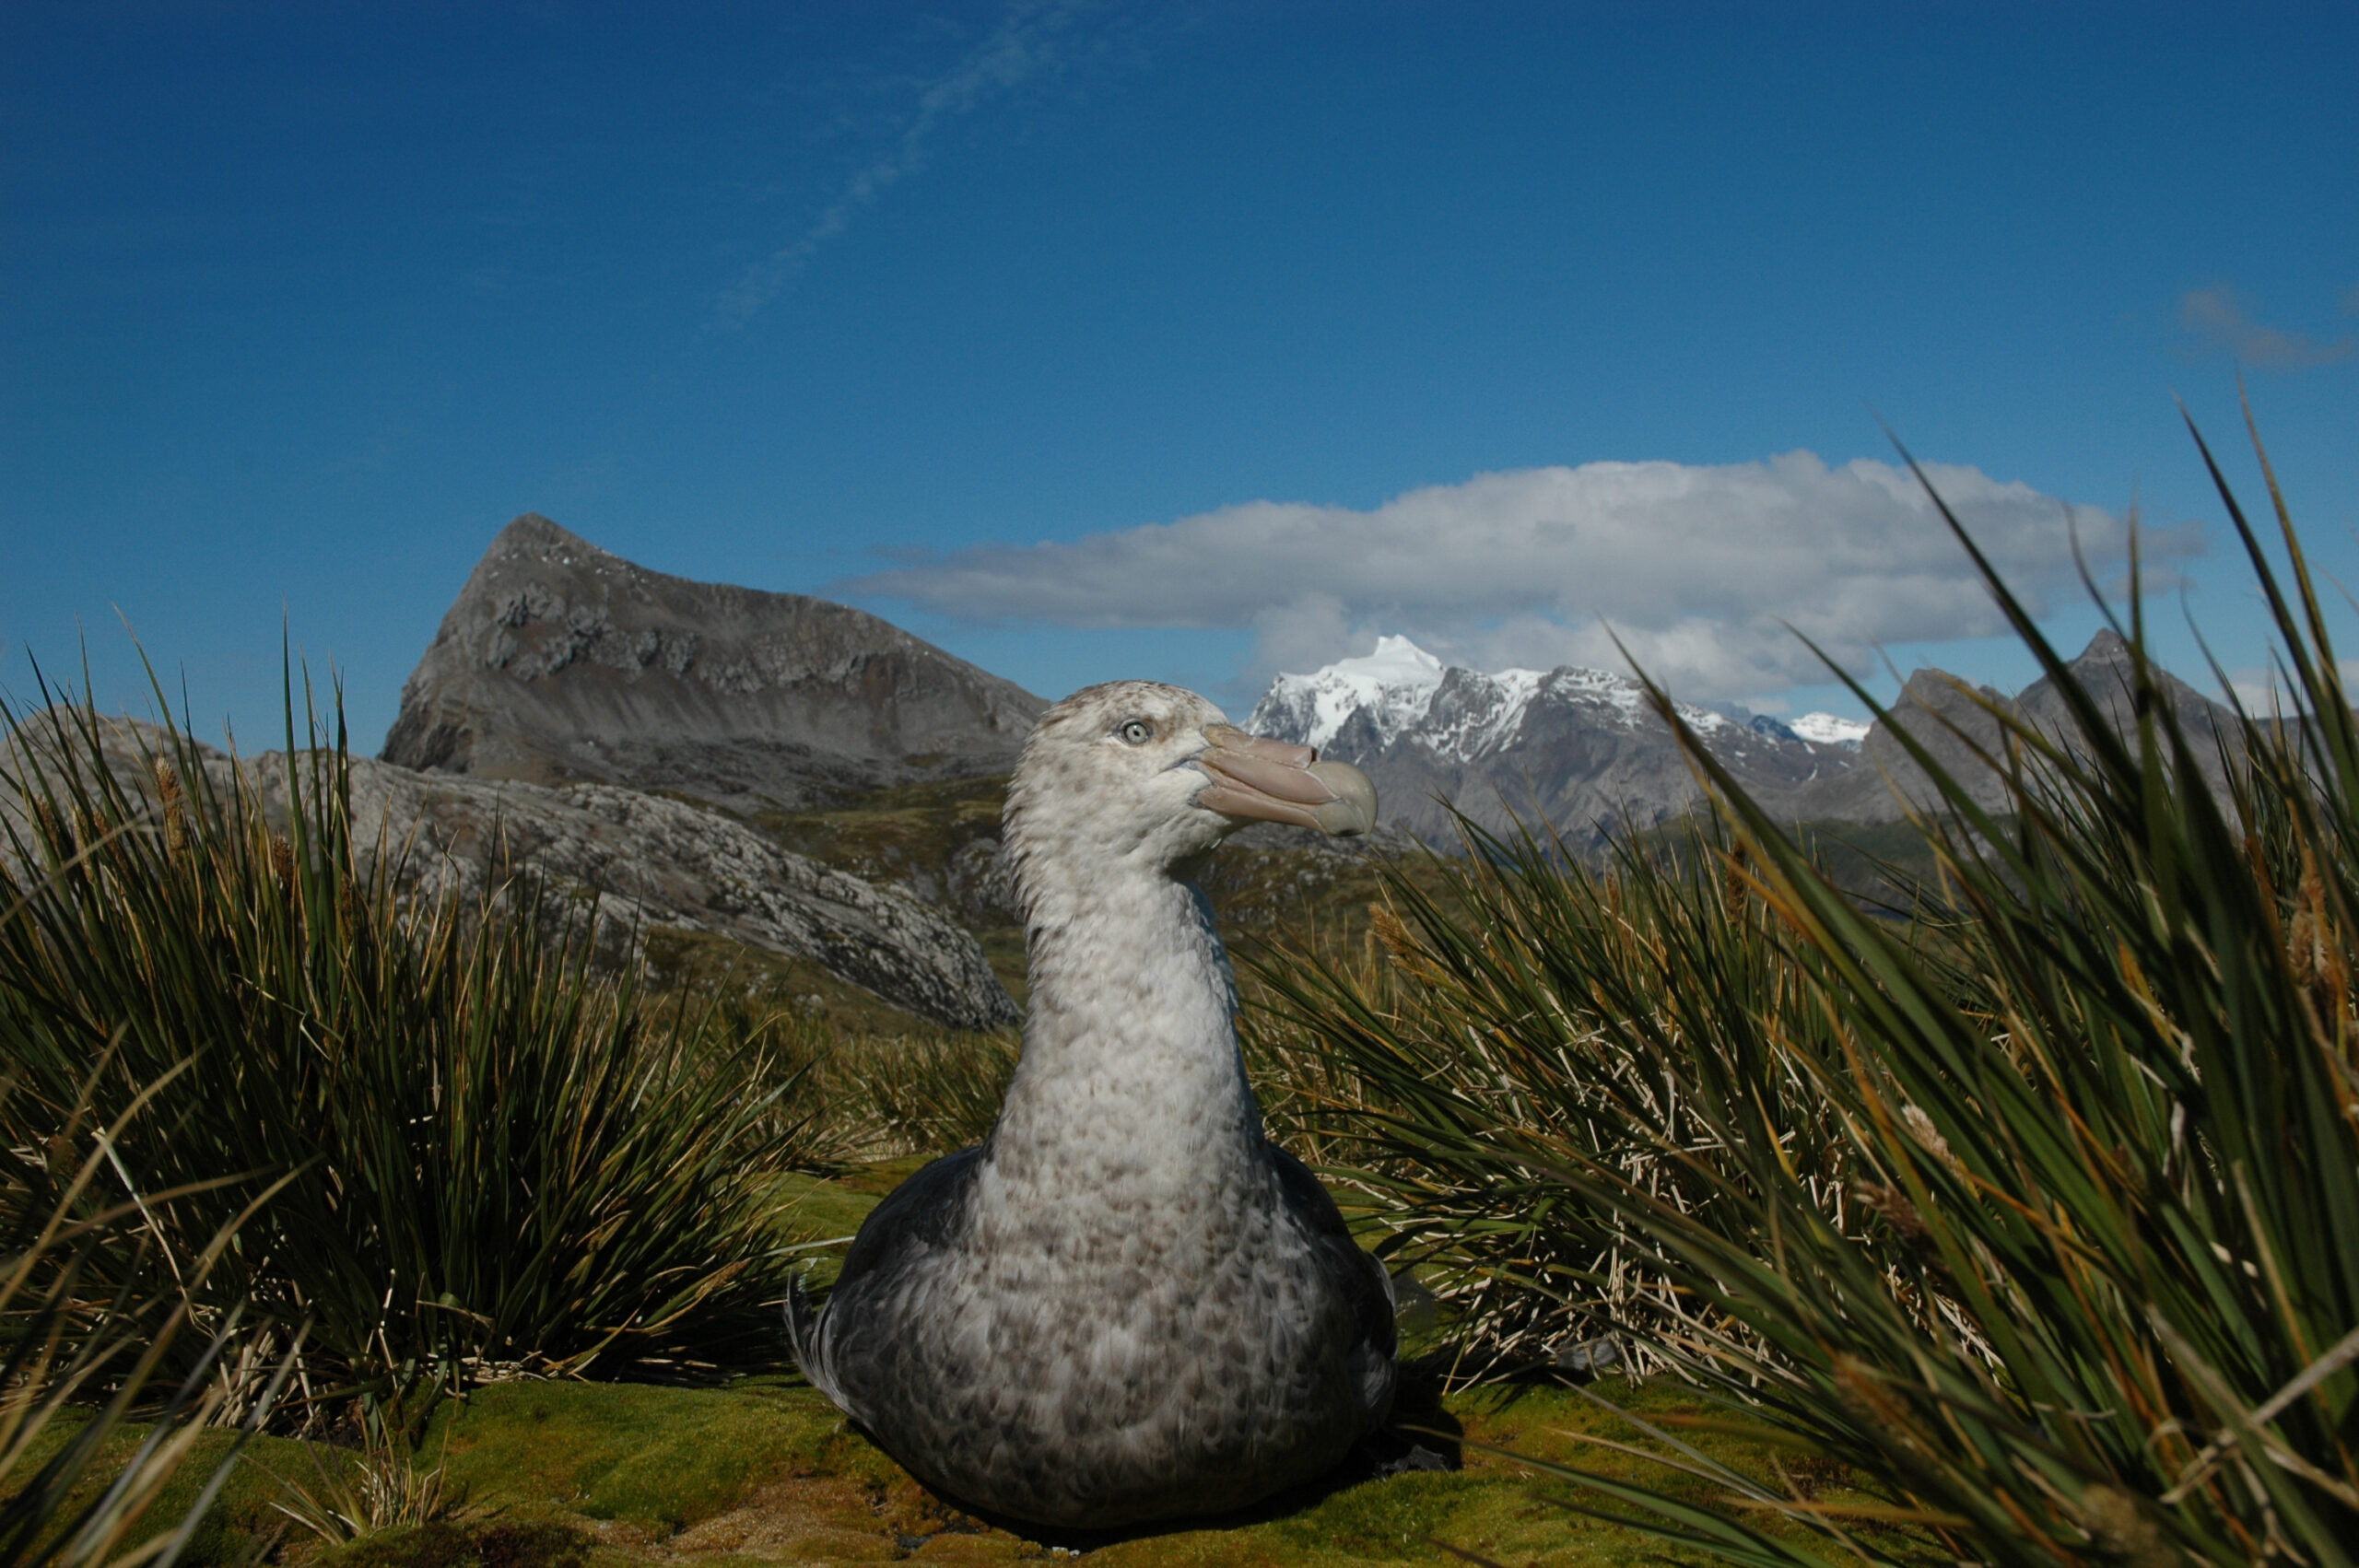 A bird sitting on top of a grassy mound